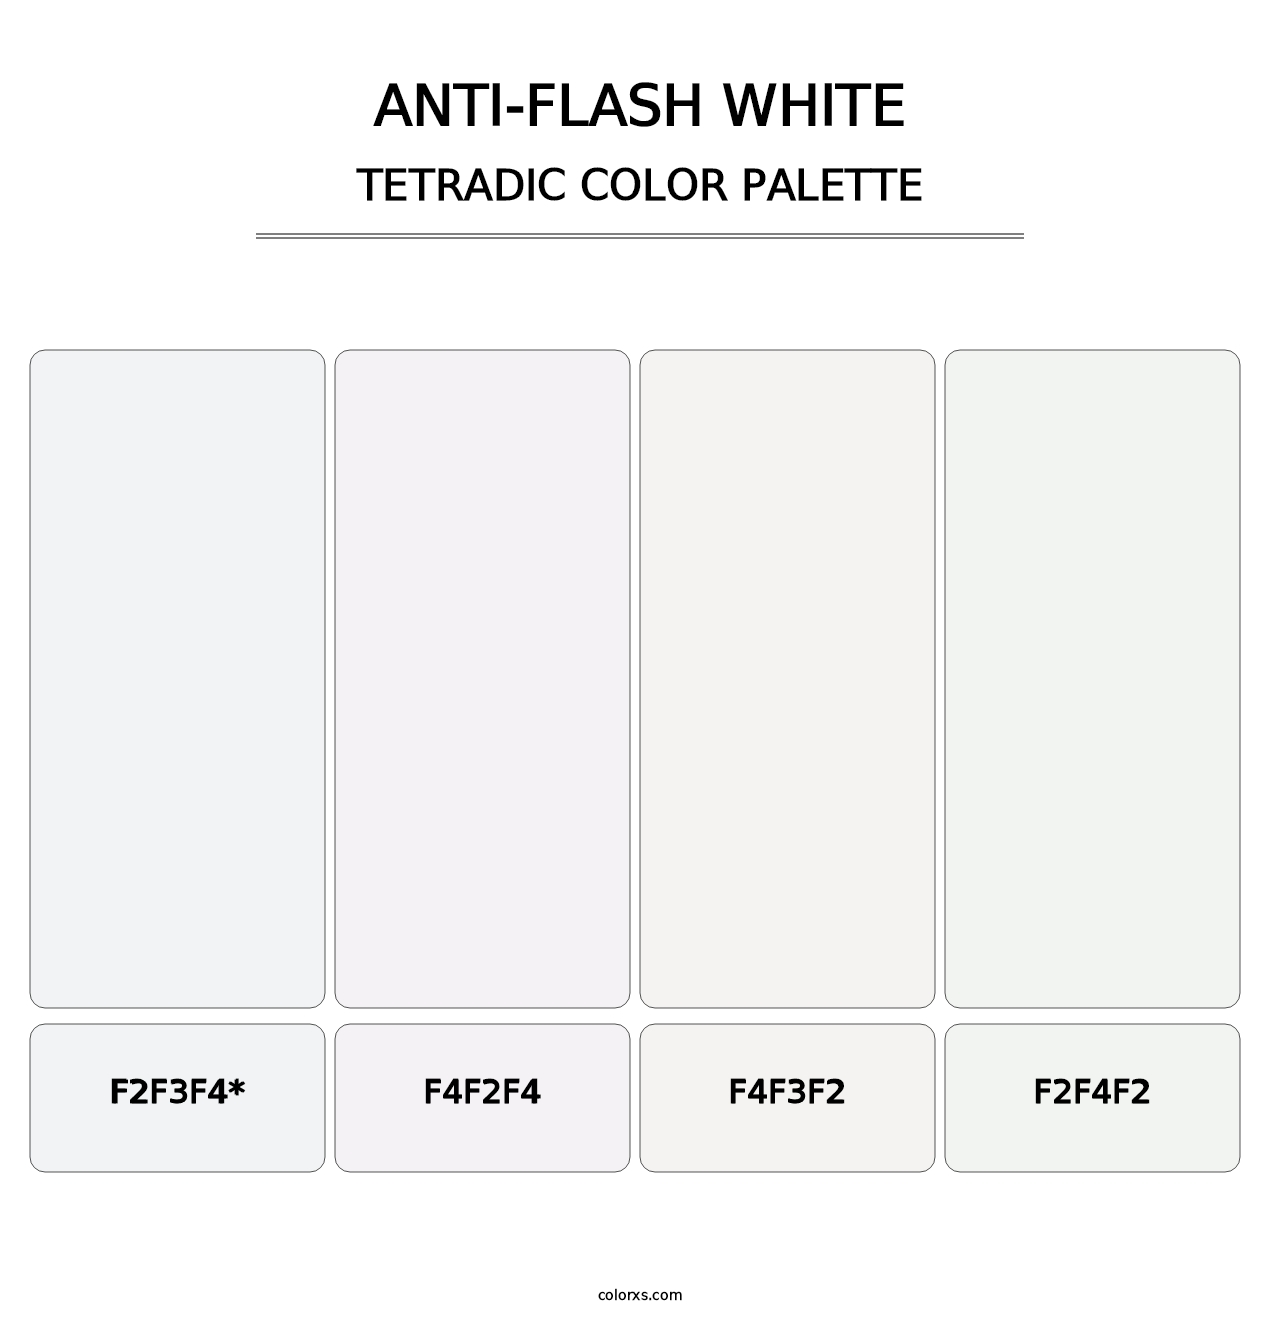 Anti-flash white - Tetradic Color Palette